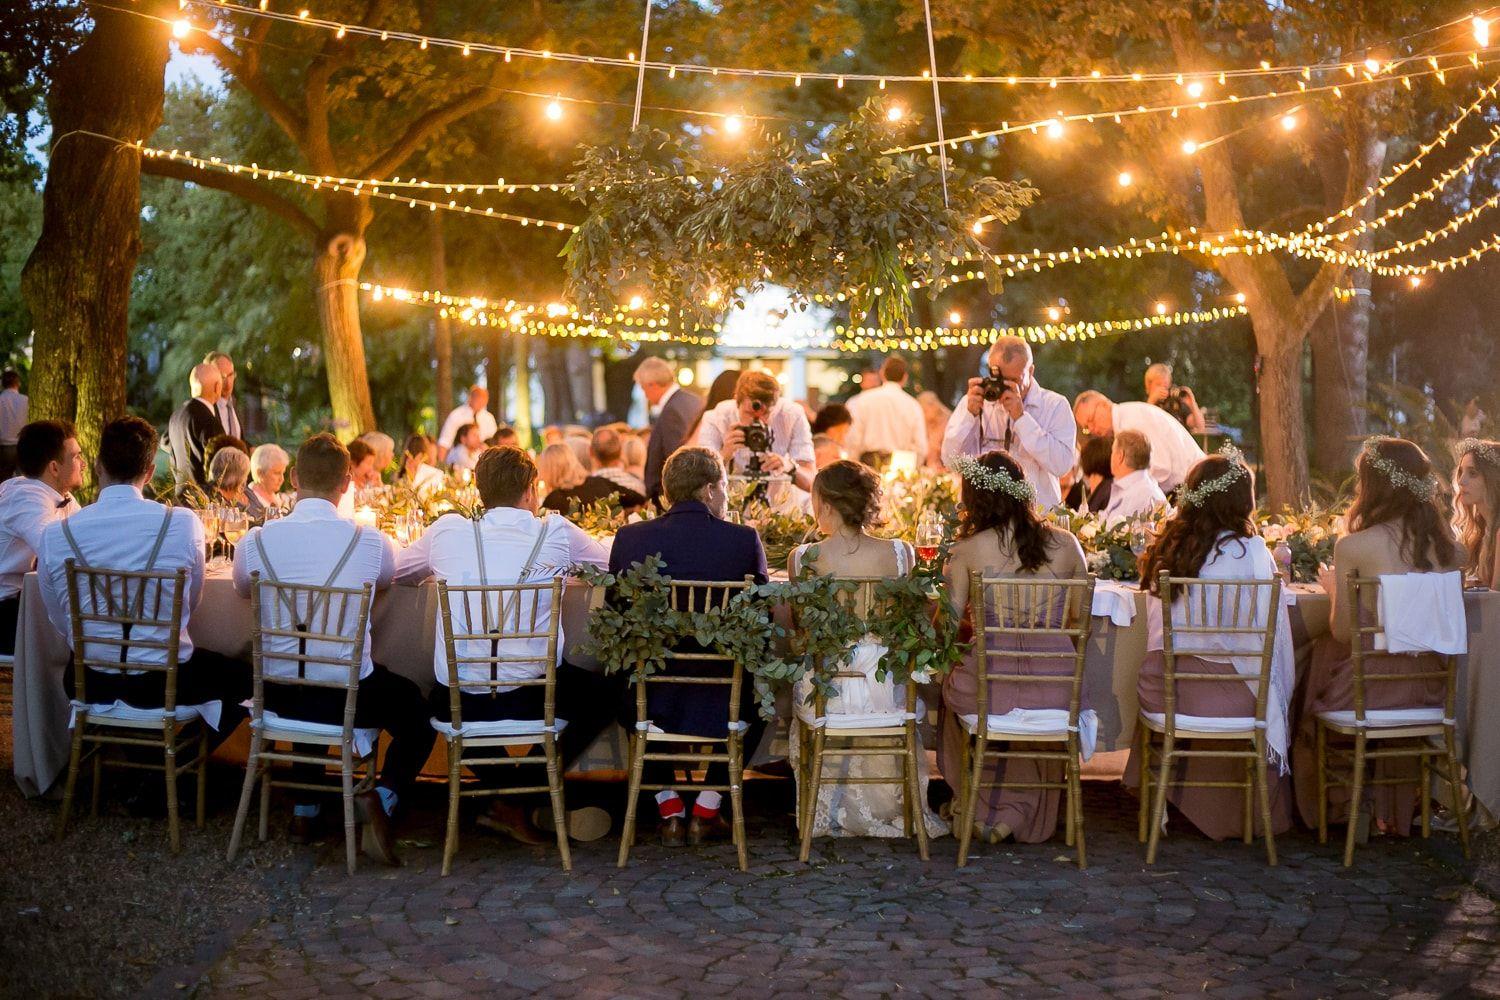 Много гостей за столом. Свадьба застолье. Свадьба за столом. Гости на свадьбе за столом. Свадебное застолье на природе.